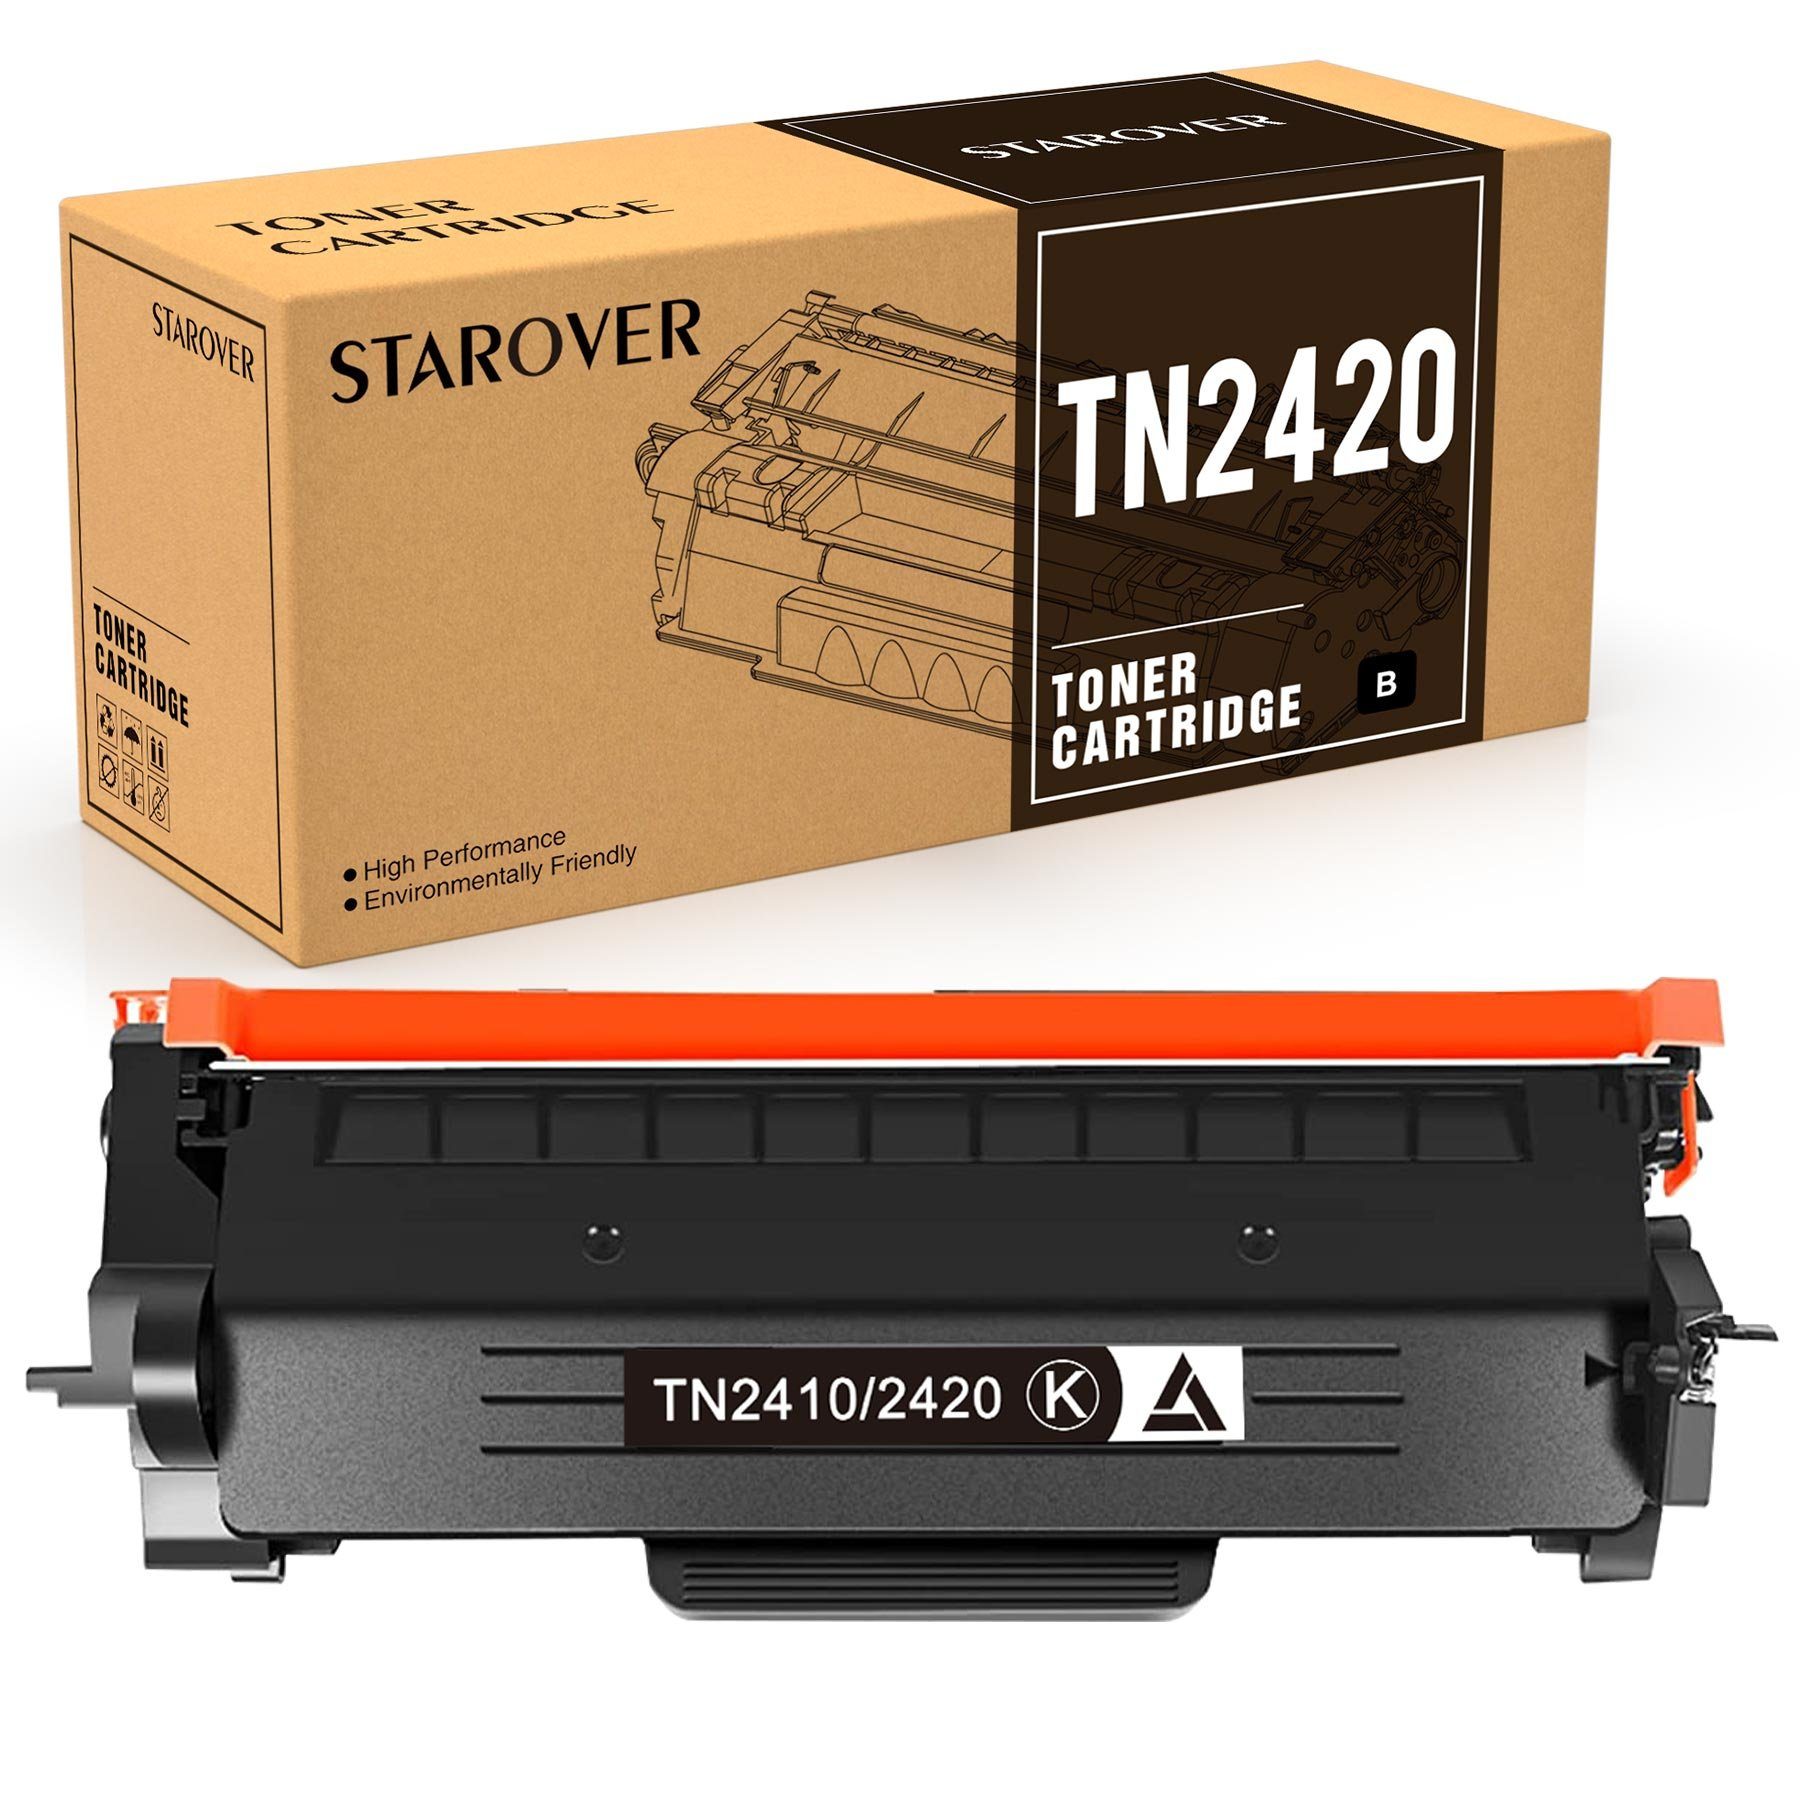 STAROVER Tonerpatrone TN 2420 2410 für Brother HL-L2310D DCP-L2510D  MFC-L2710DN, (MFC-L2710DW MFC-L2710DN MFC-L2750DW), HL-L2350DW HL-L2730DN  DCP-L2530DW